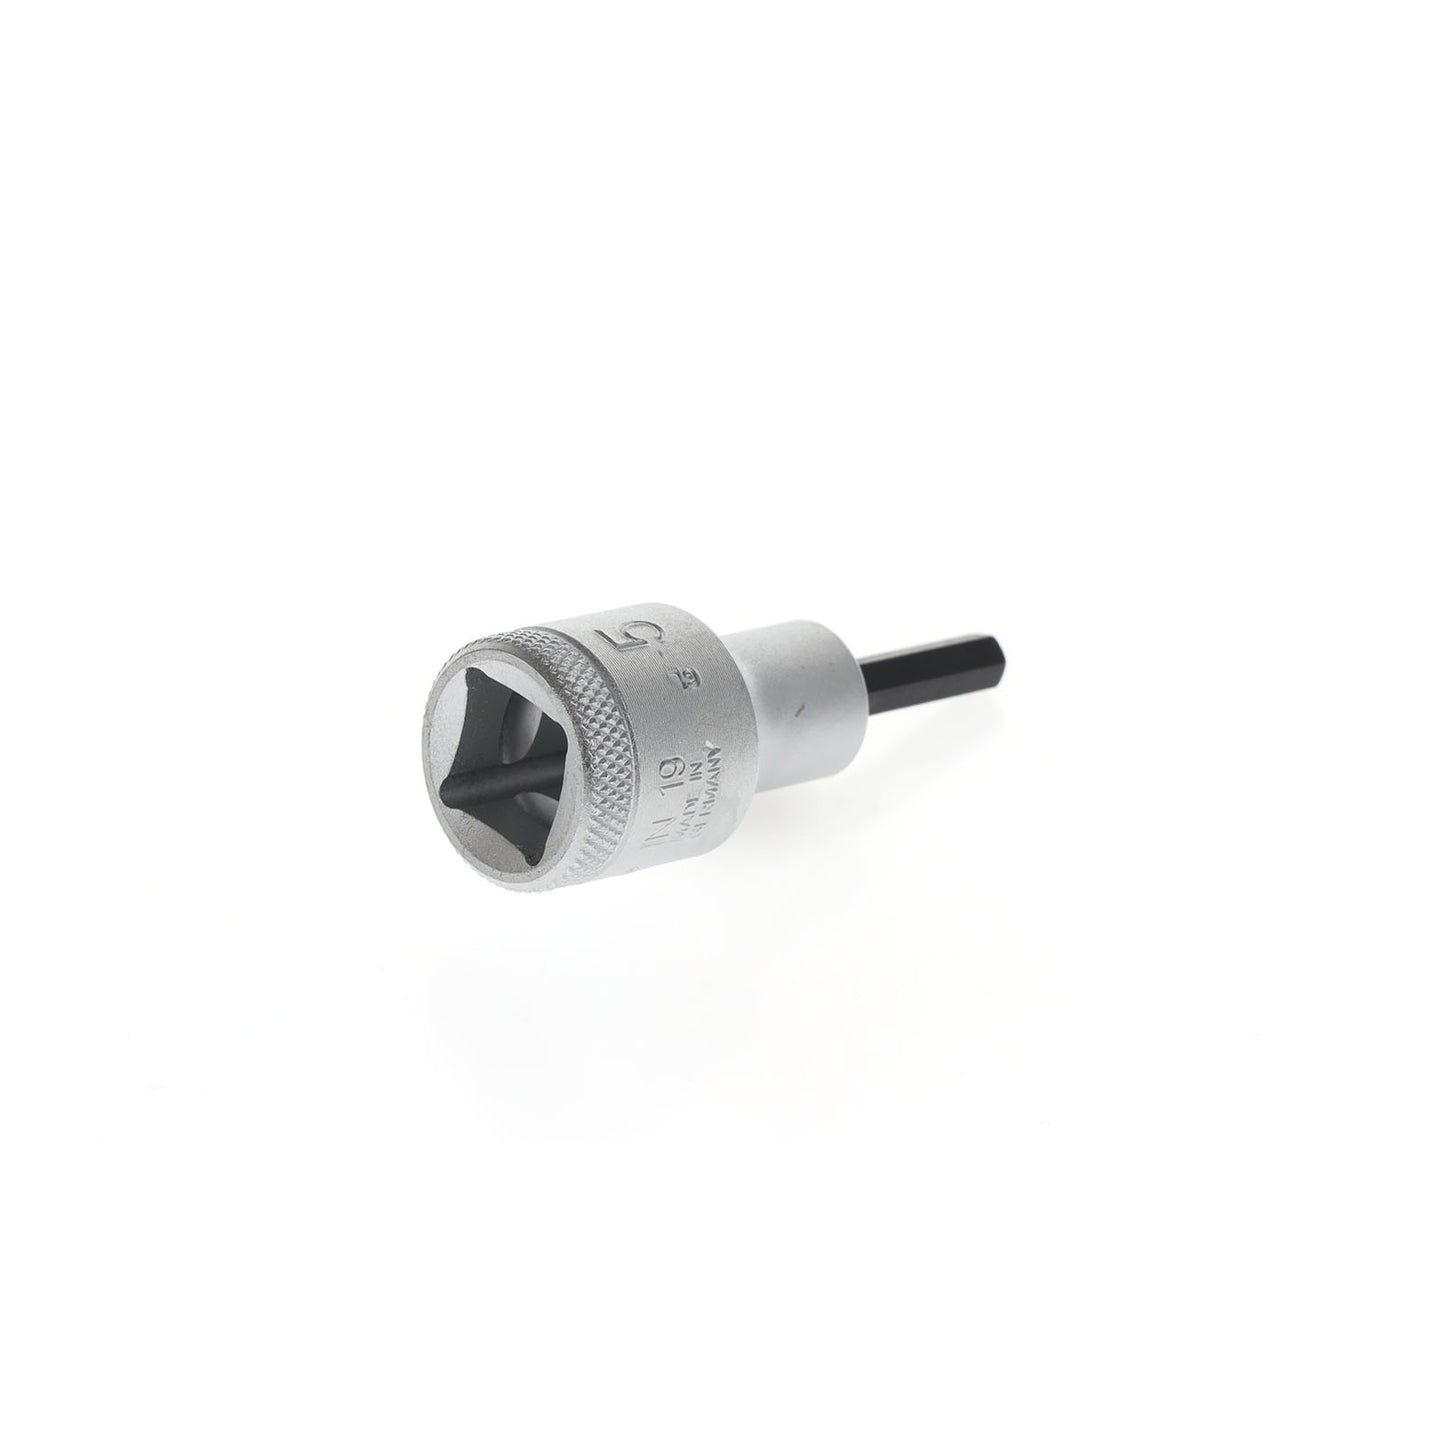 GEDORE IN 19 5 - INBUS® socket 1/2", 5 mm (6153150)